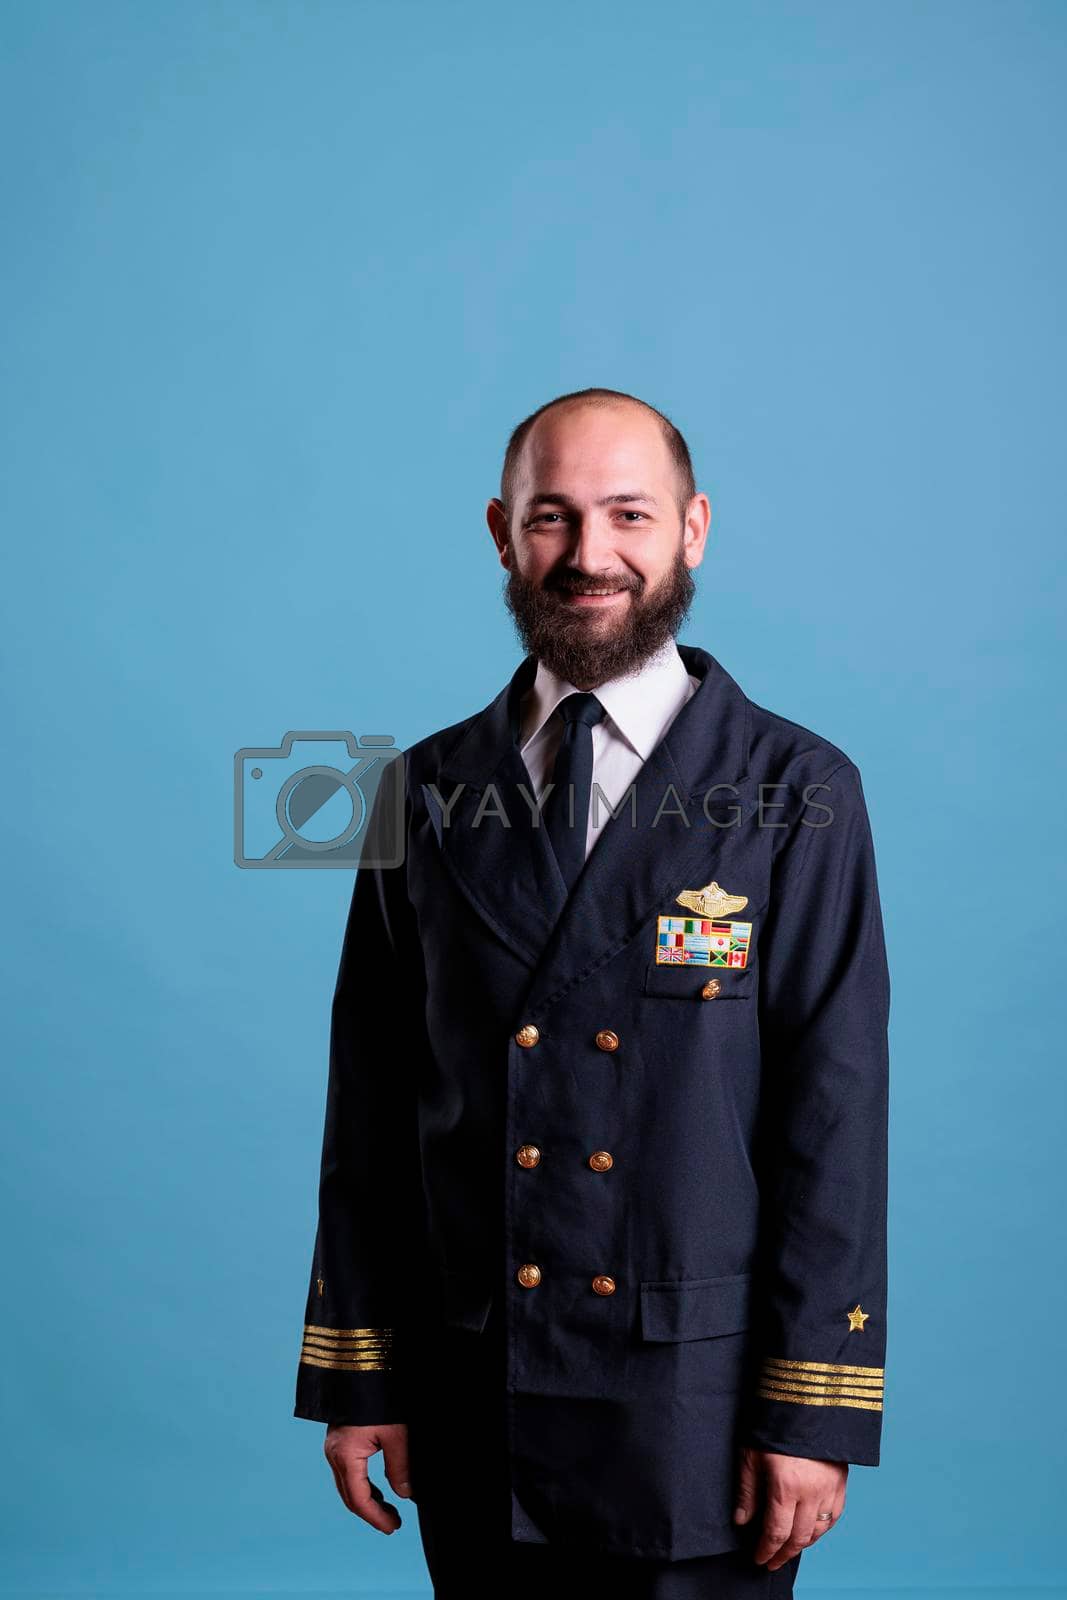 Royalty free image of Airplane captain wearing uniform portrait by DCStudio